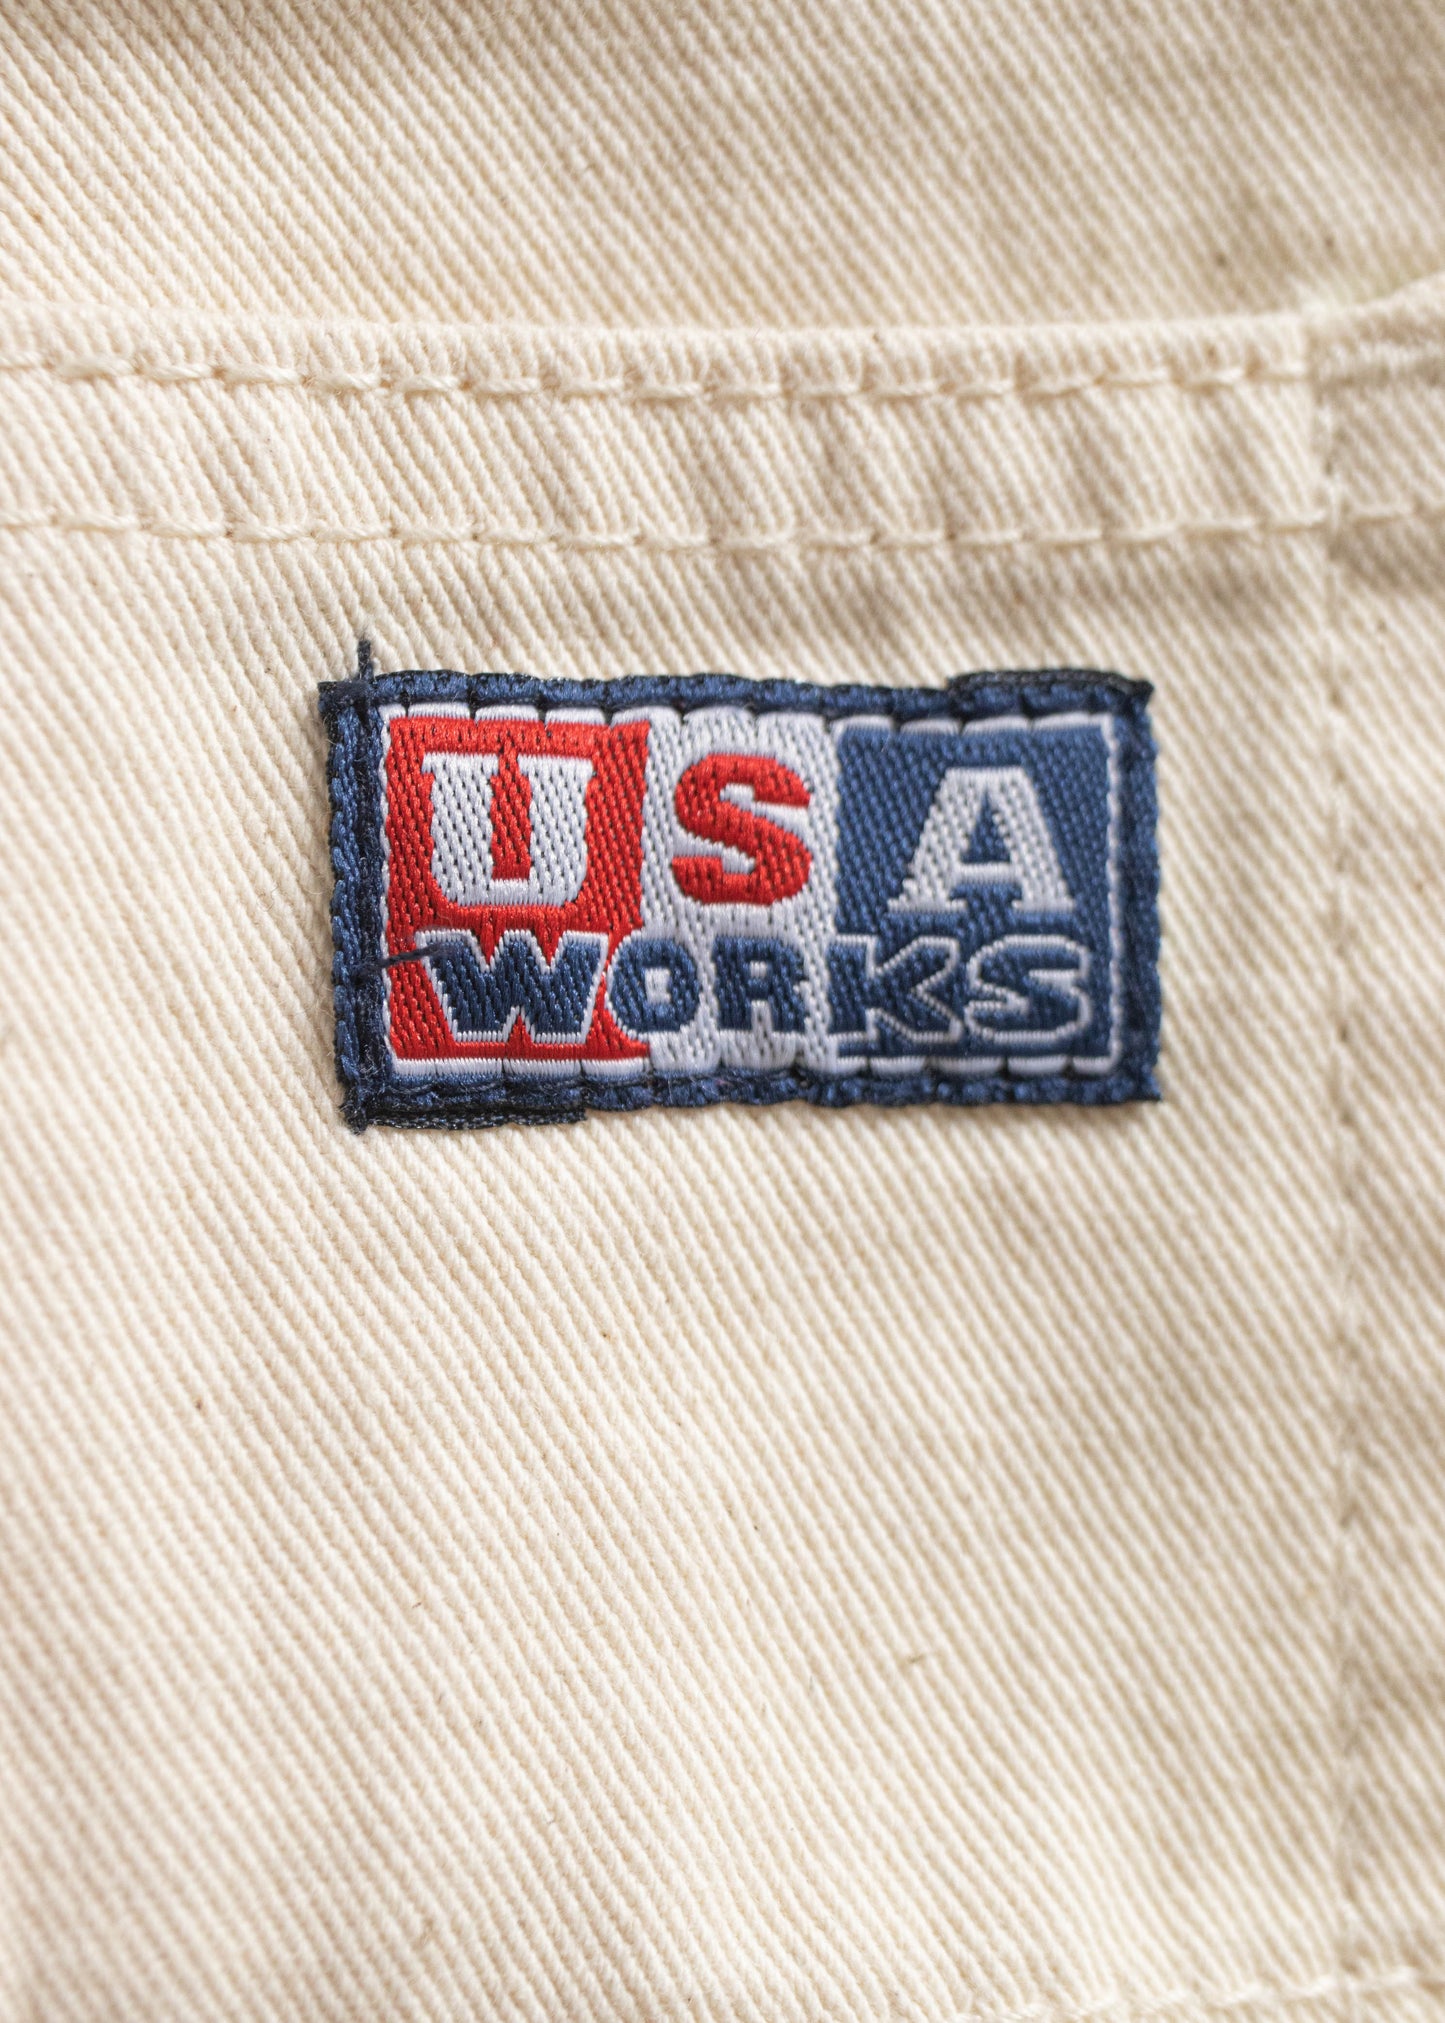 1980s USA Works Deadstock Painter Pants Size Women's 29 Men's 32